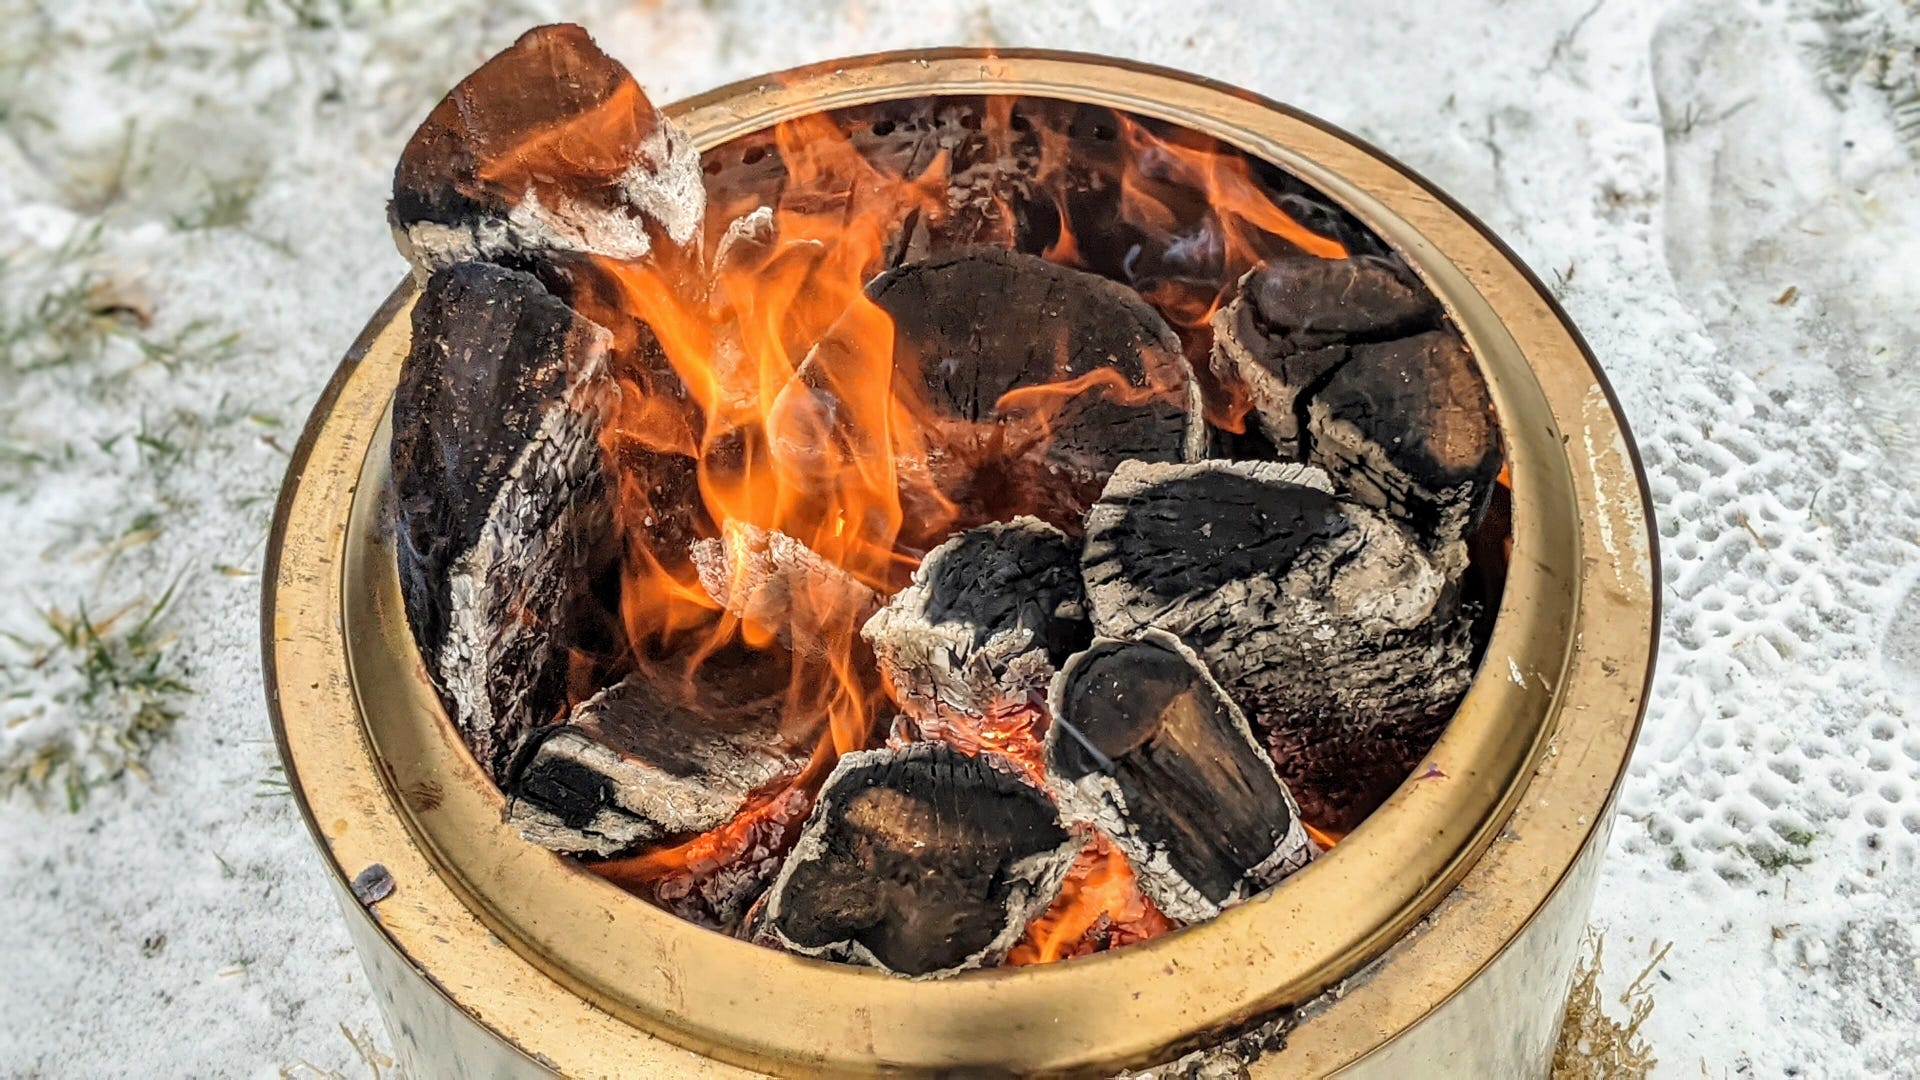 Swedish fire pit flame